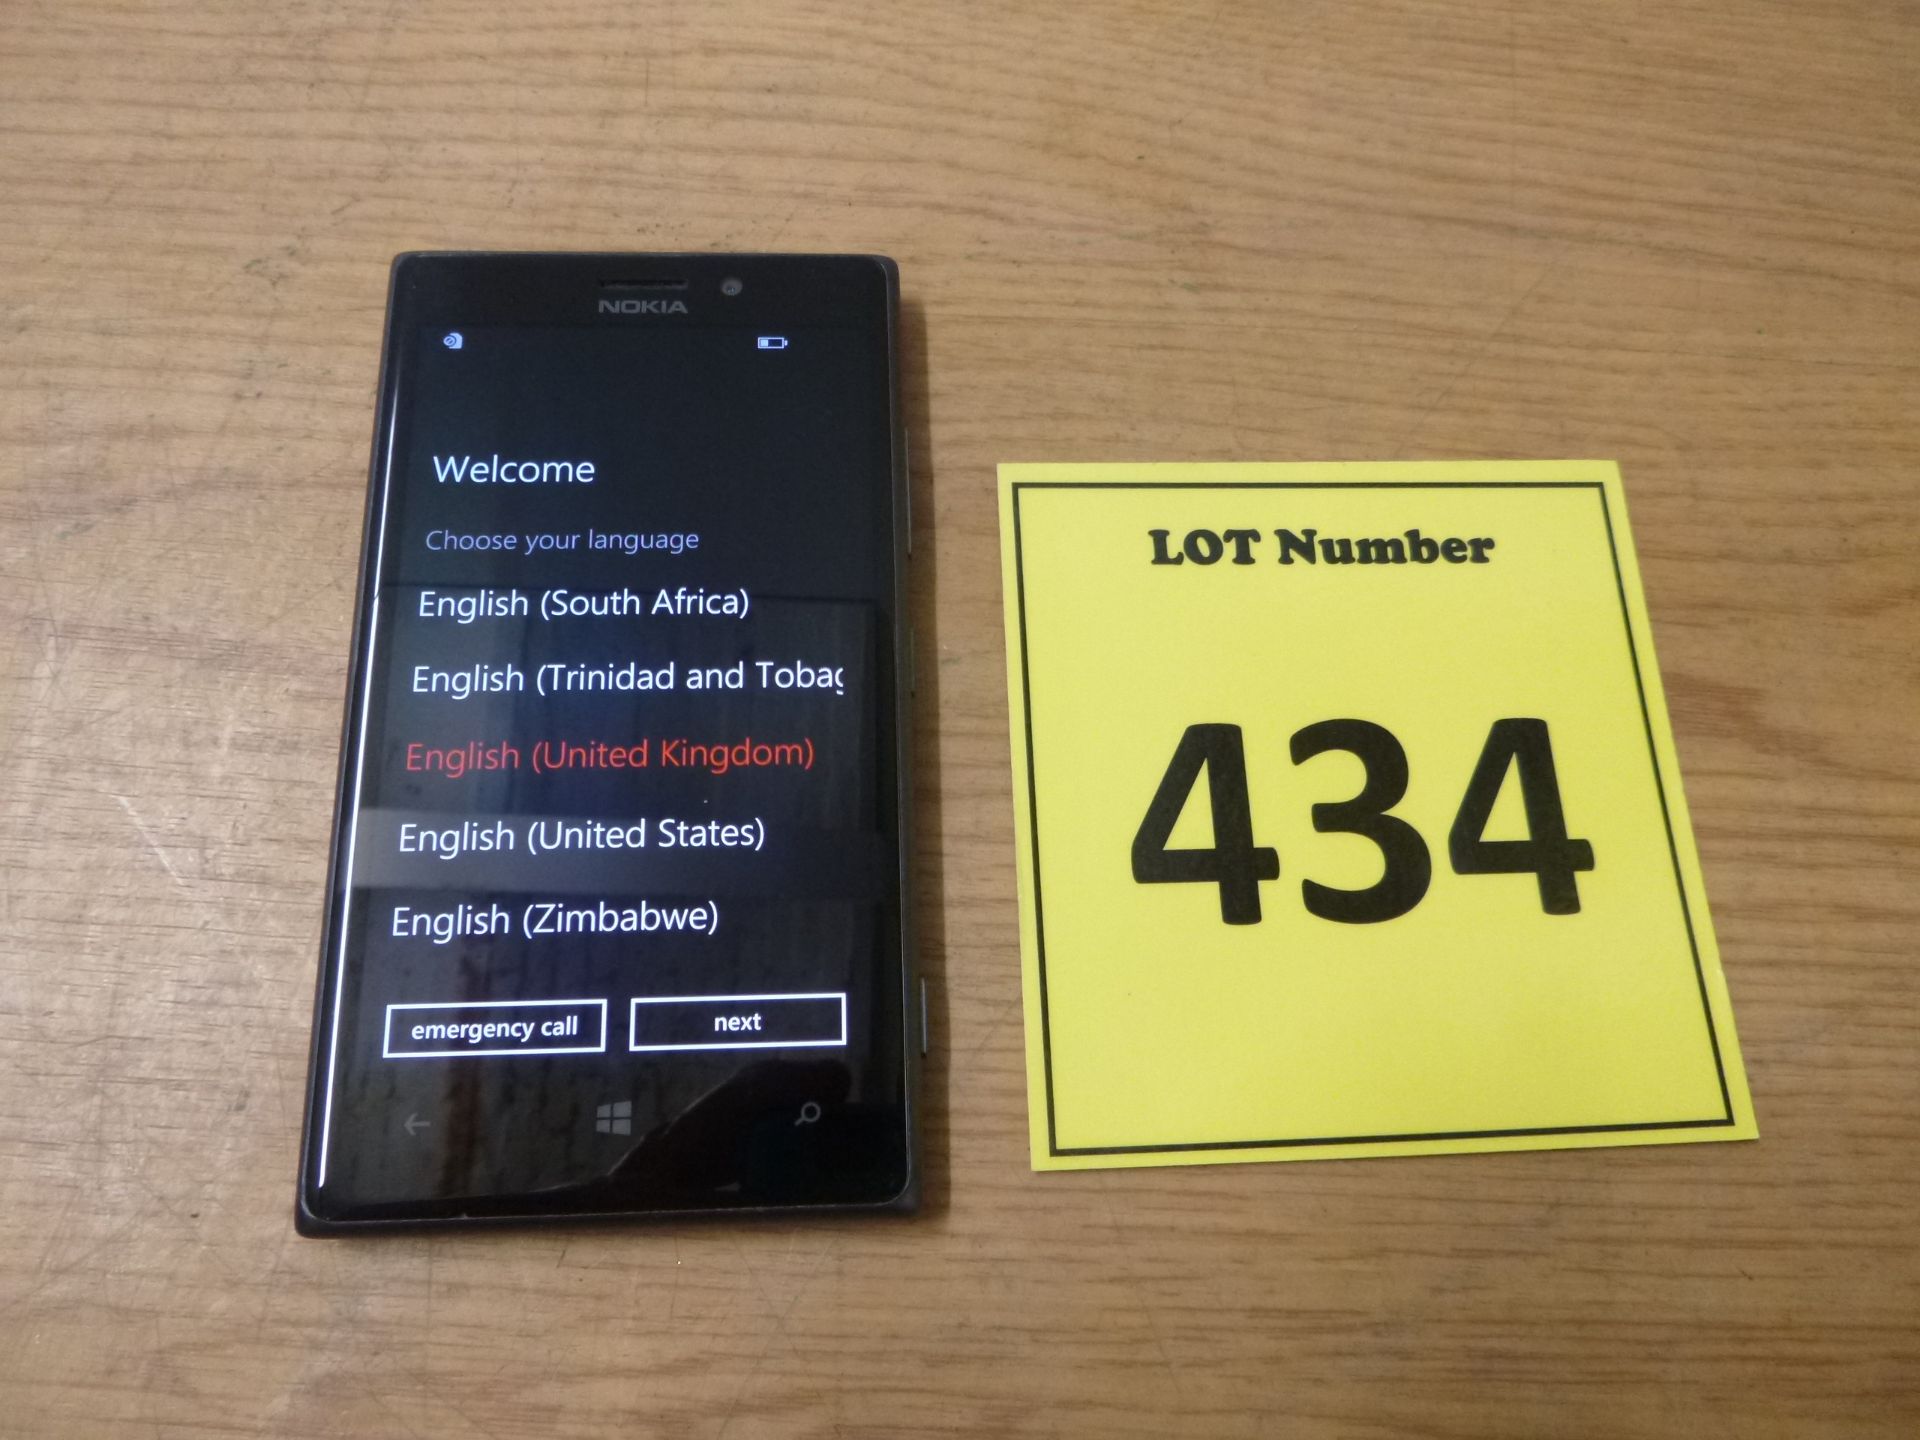 NOKIA LUMIA 925.4 32GB MOBILE SMARTPHONE-UNLOCKED